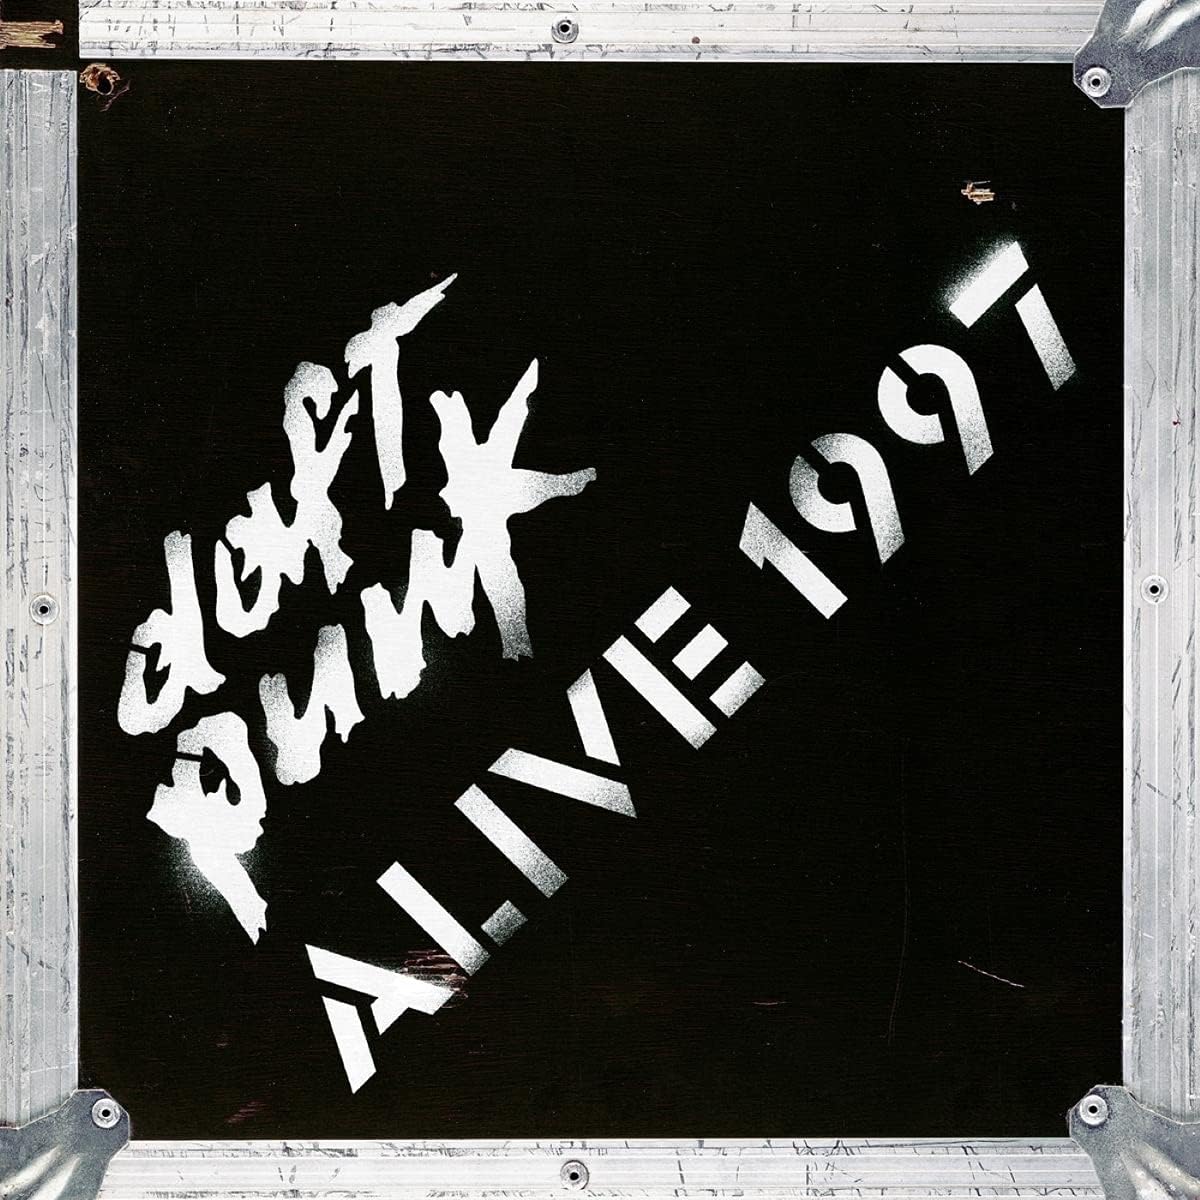 Daft Punk "Alive 1997" Vinyl